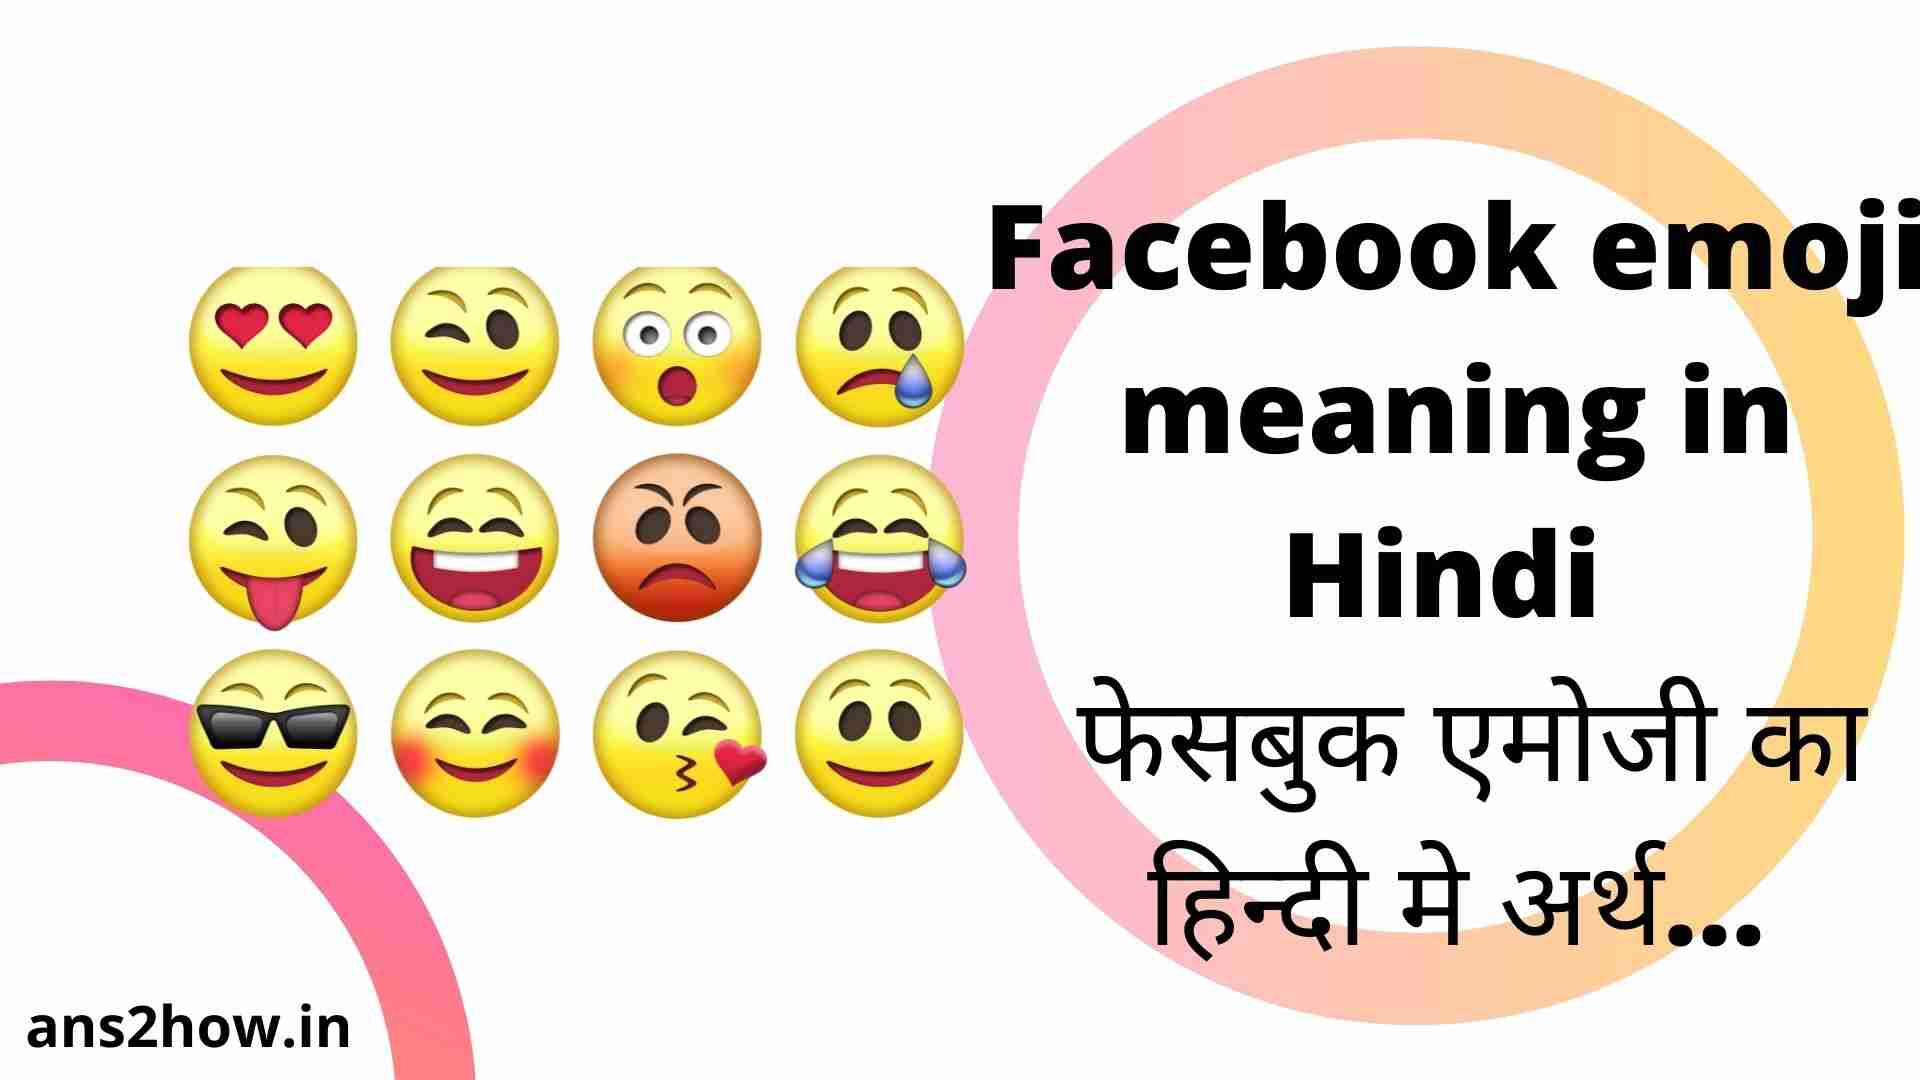 Facebook emoji meaning in Hindi